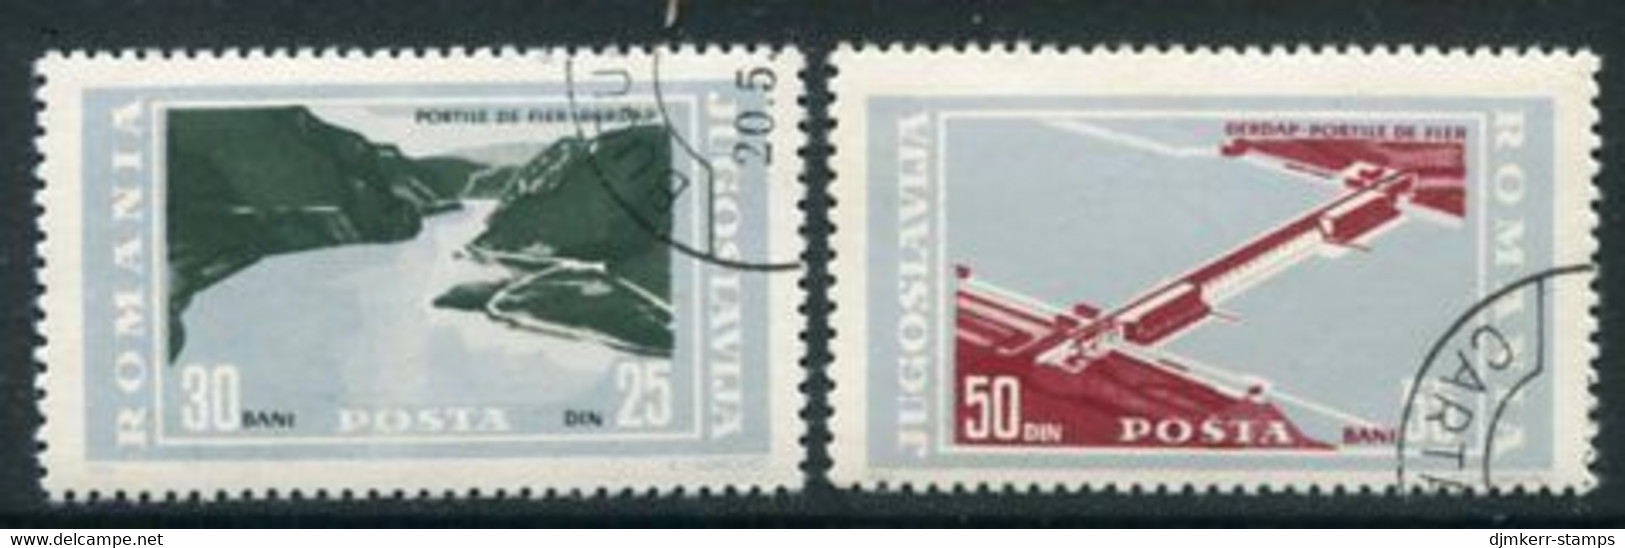 ROMANIA 1965 Djerdap Dam Used.  Michel 2403-04 - Used Stamps